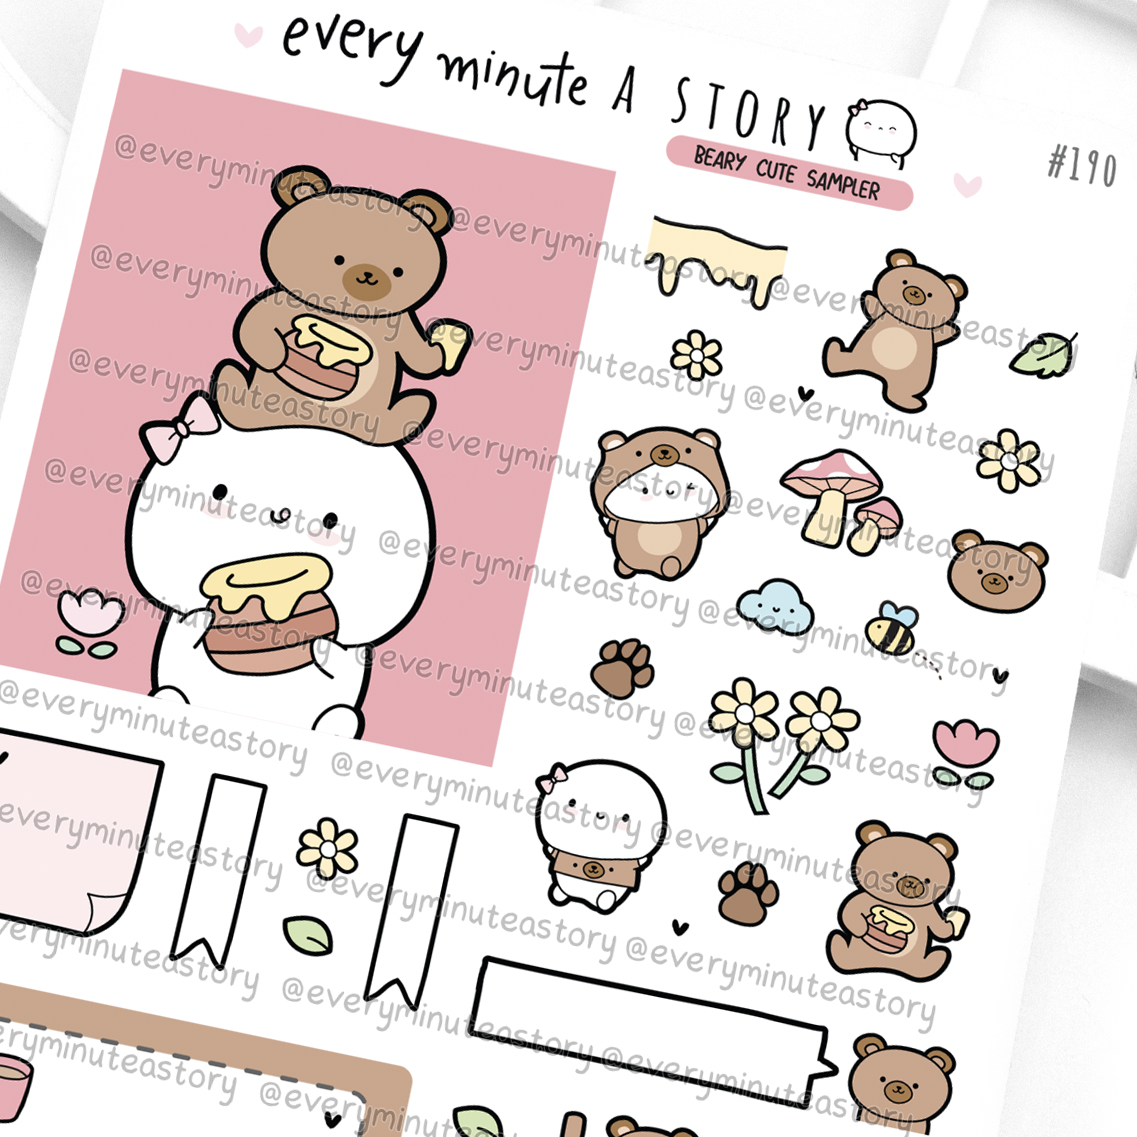 Bear-ly cute sticker sampler